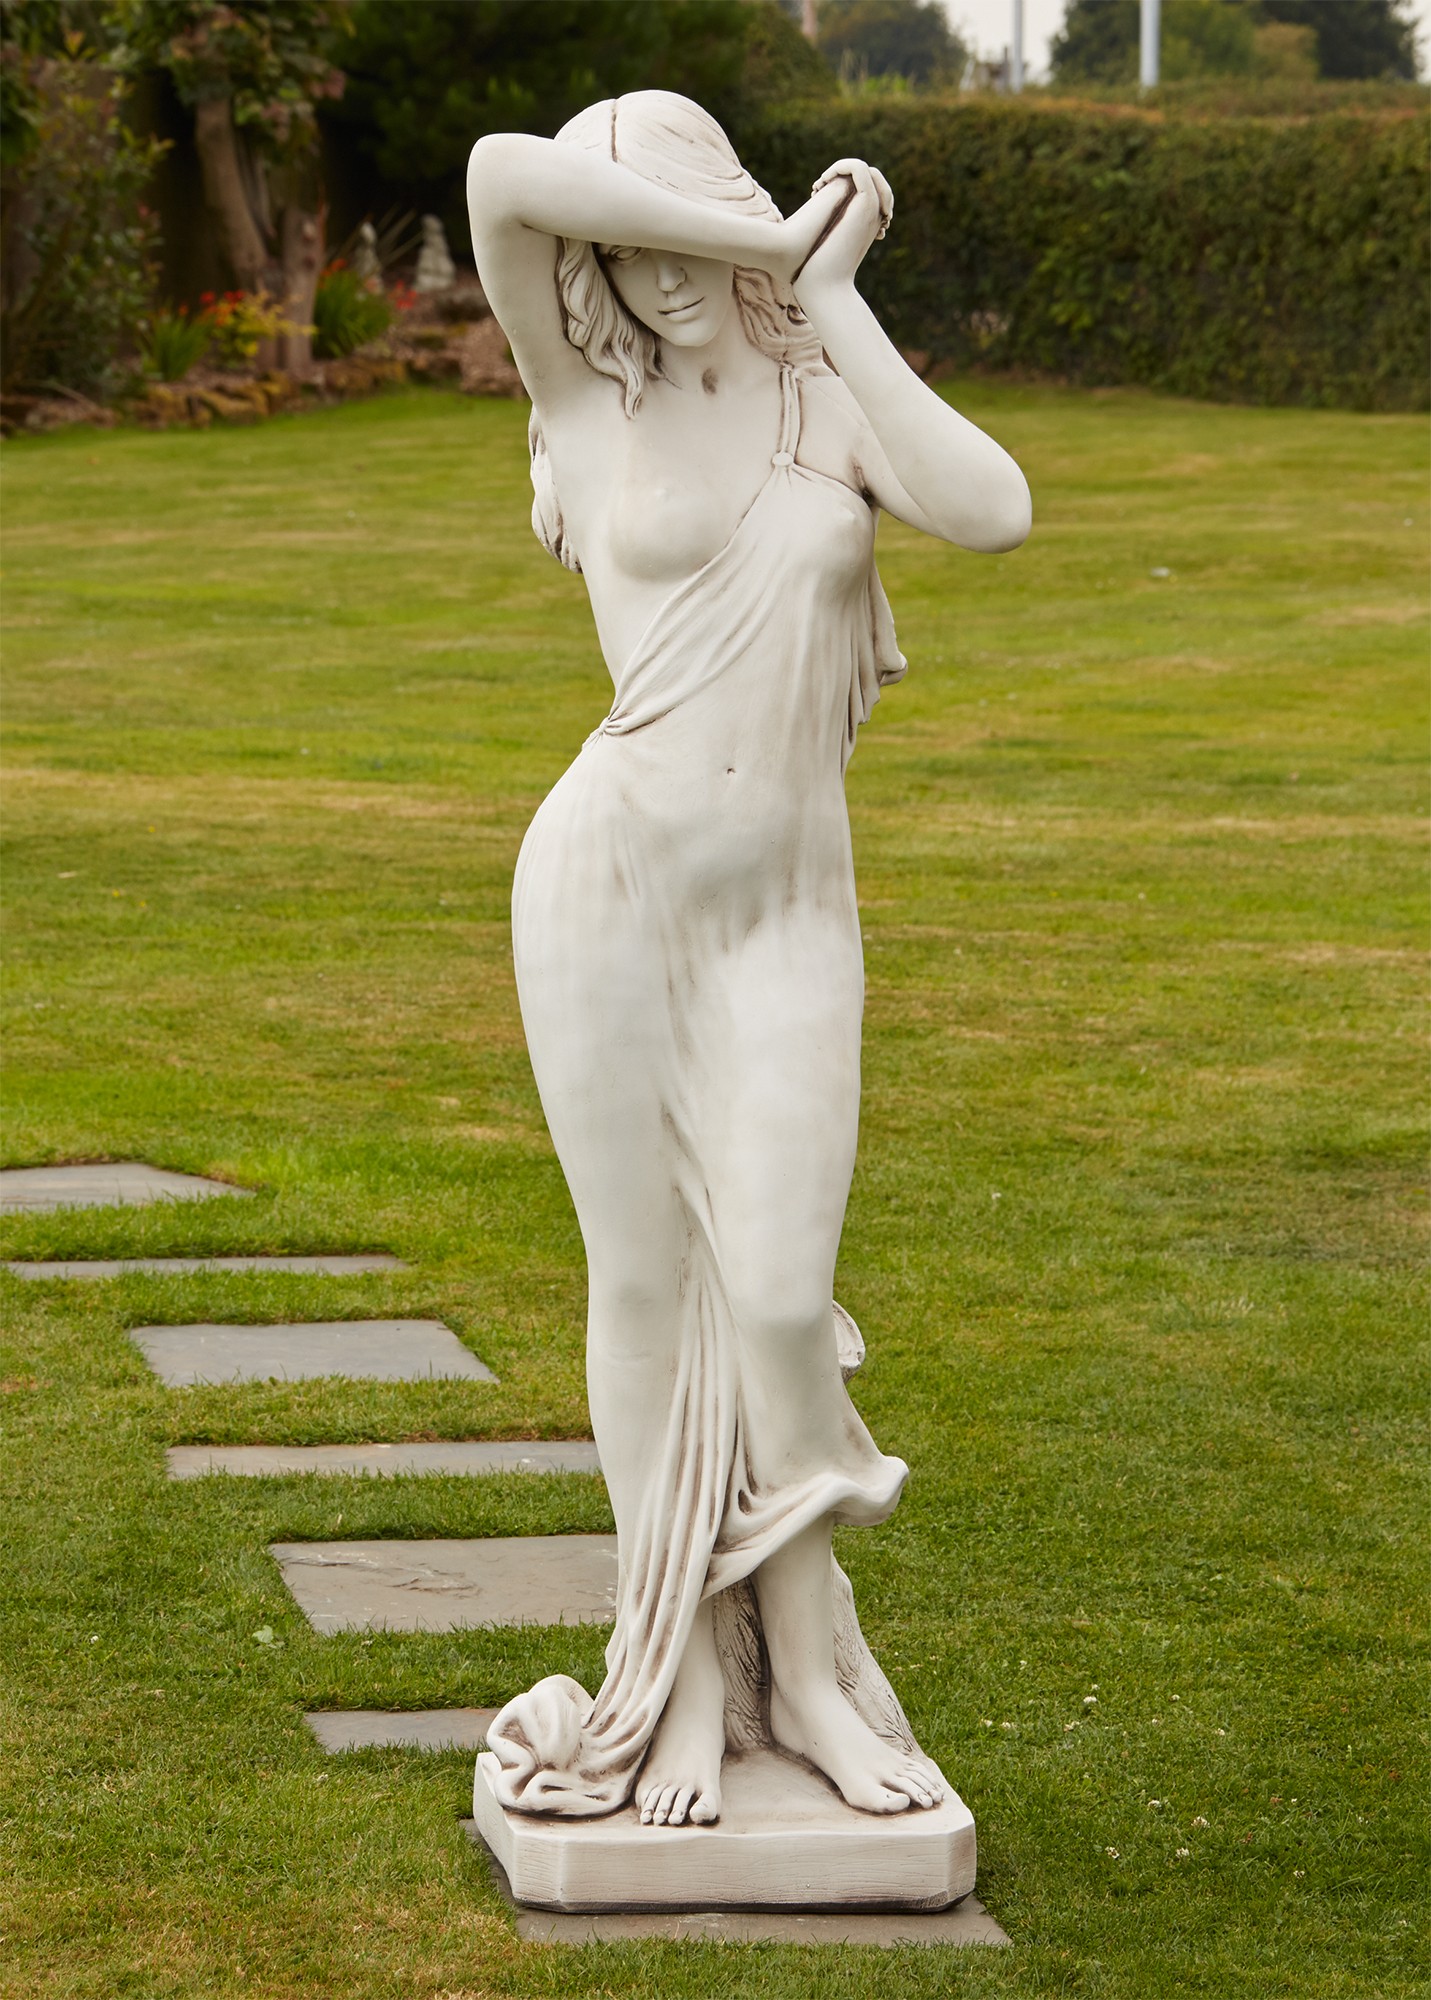 Naked Woman Figurine Stone Sculpture - Large Garden Statue | S&S Shop